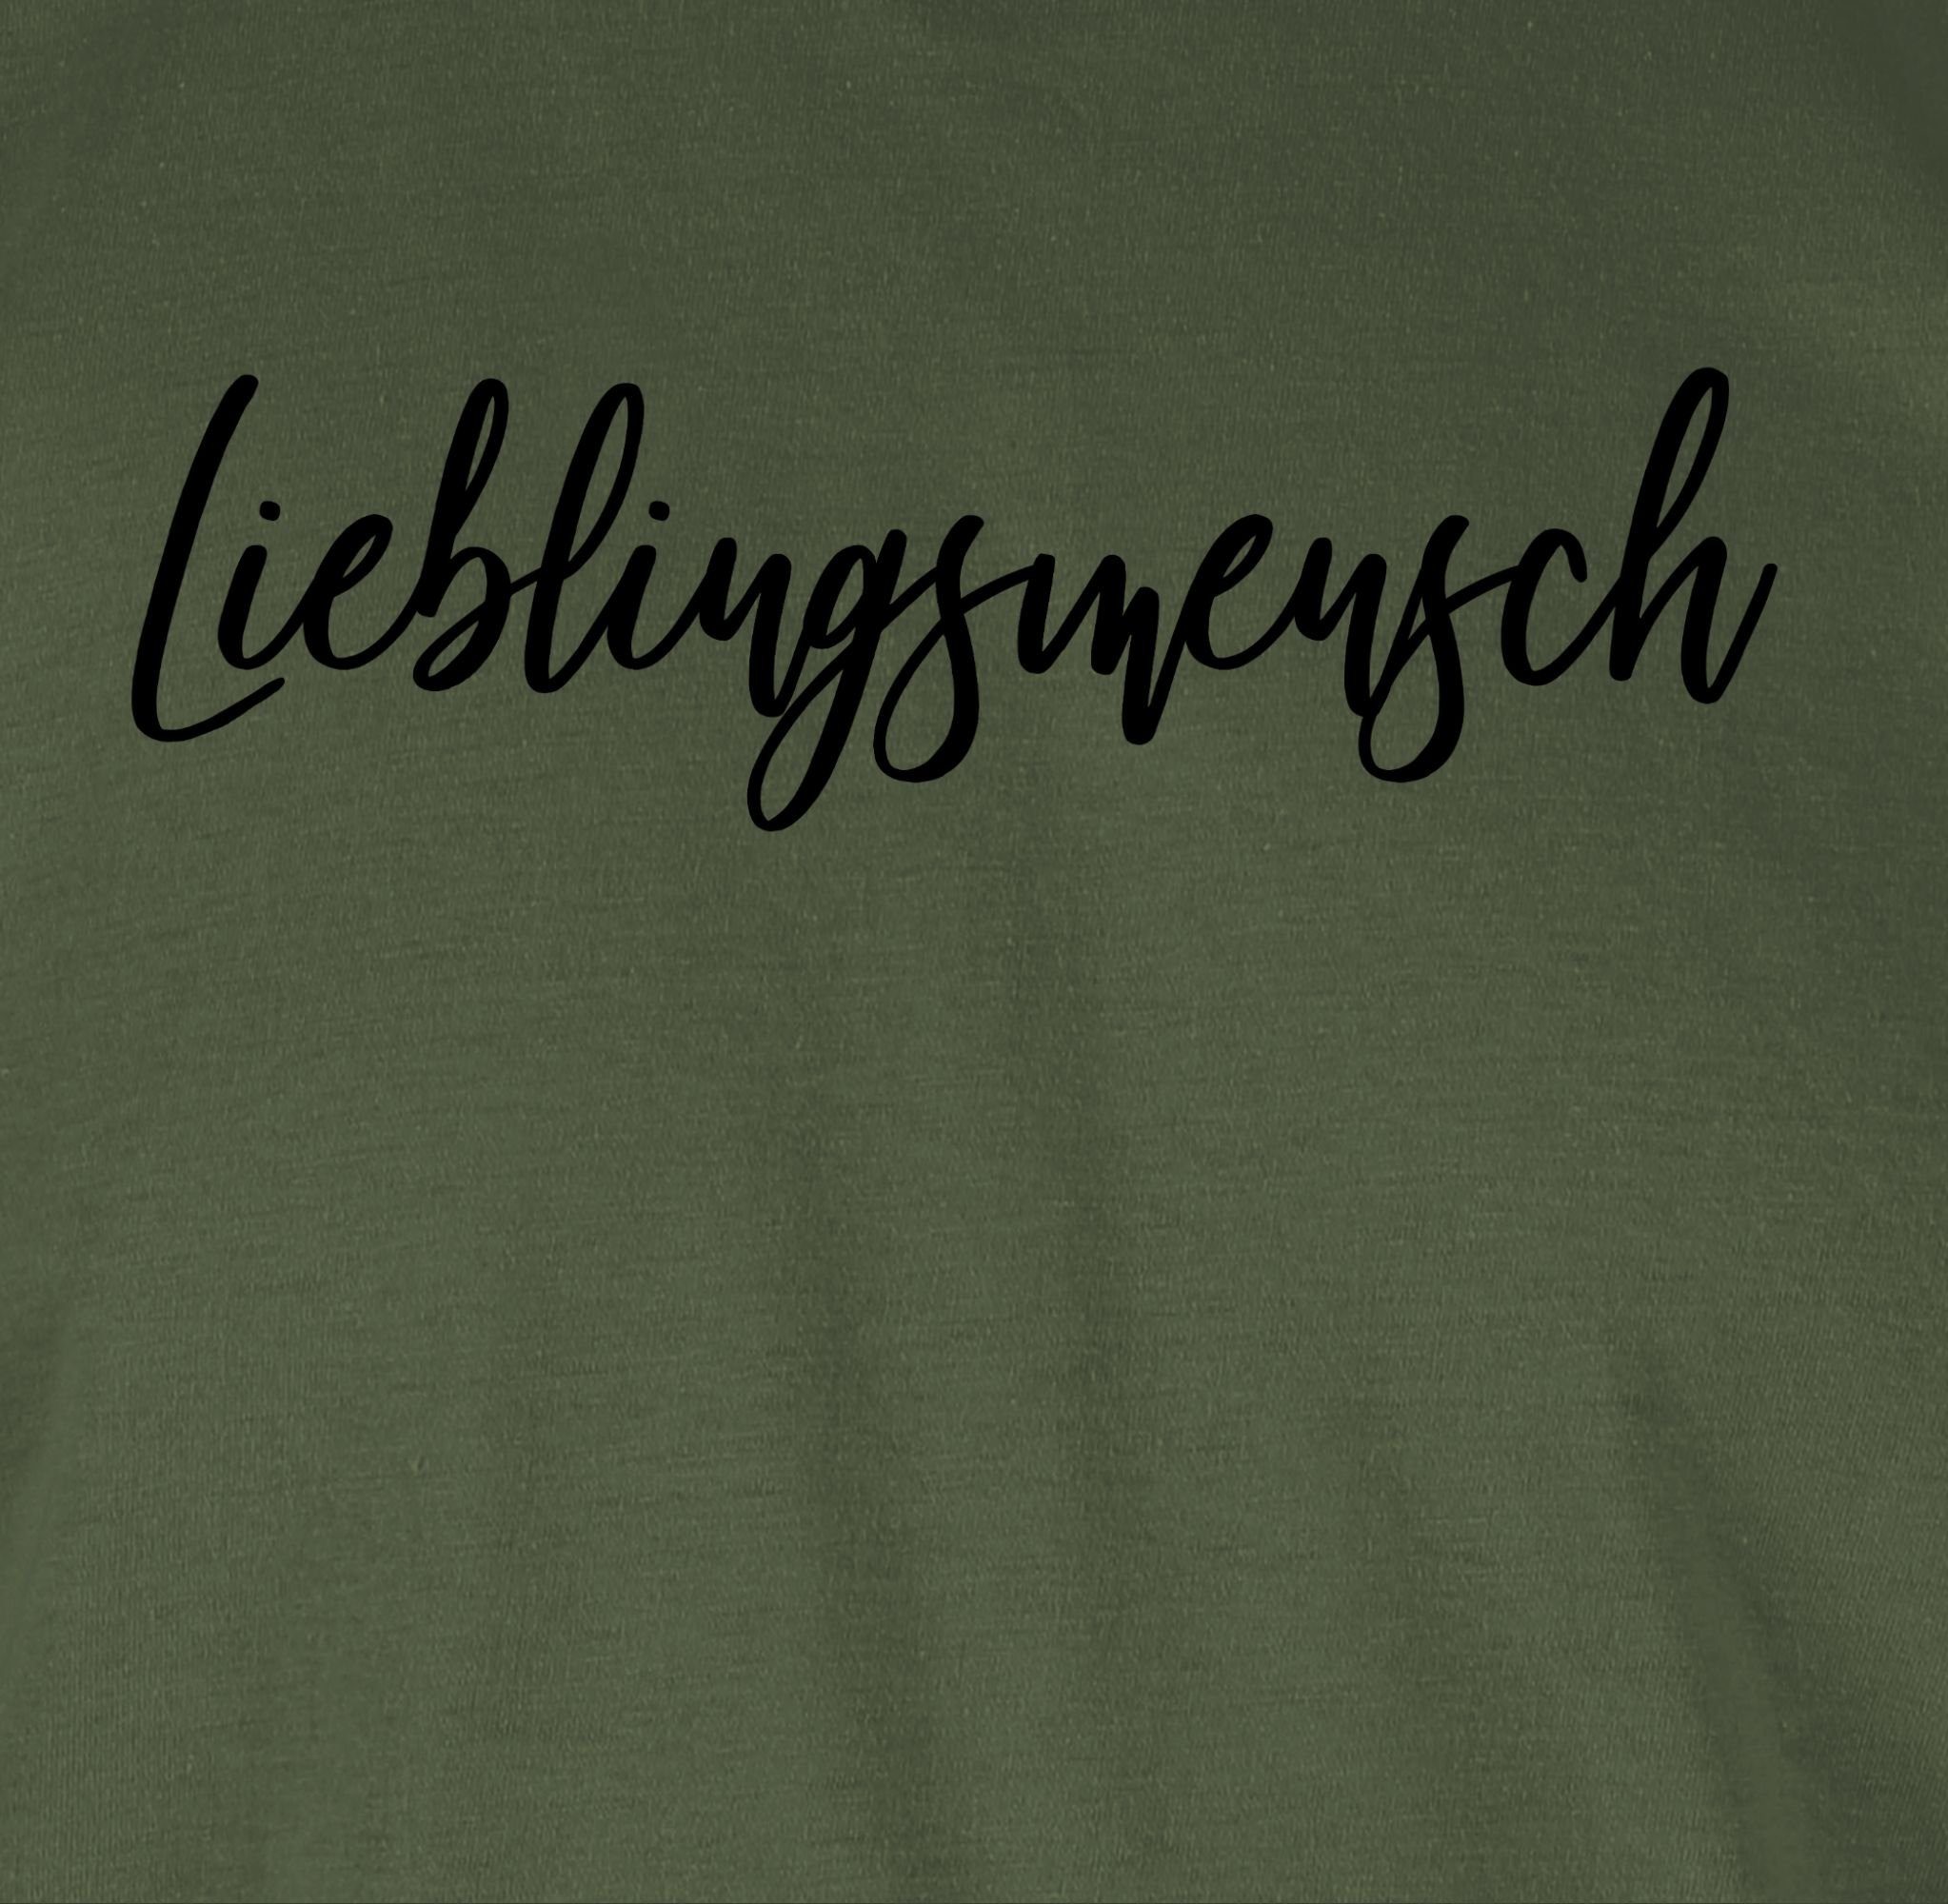 Lieblingsmensch T-Shirt Valentinstag Liebe 2 Schwarz Partner Shirtracer Army Grün